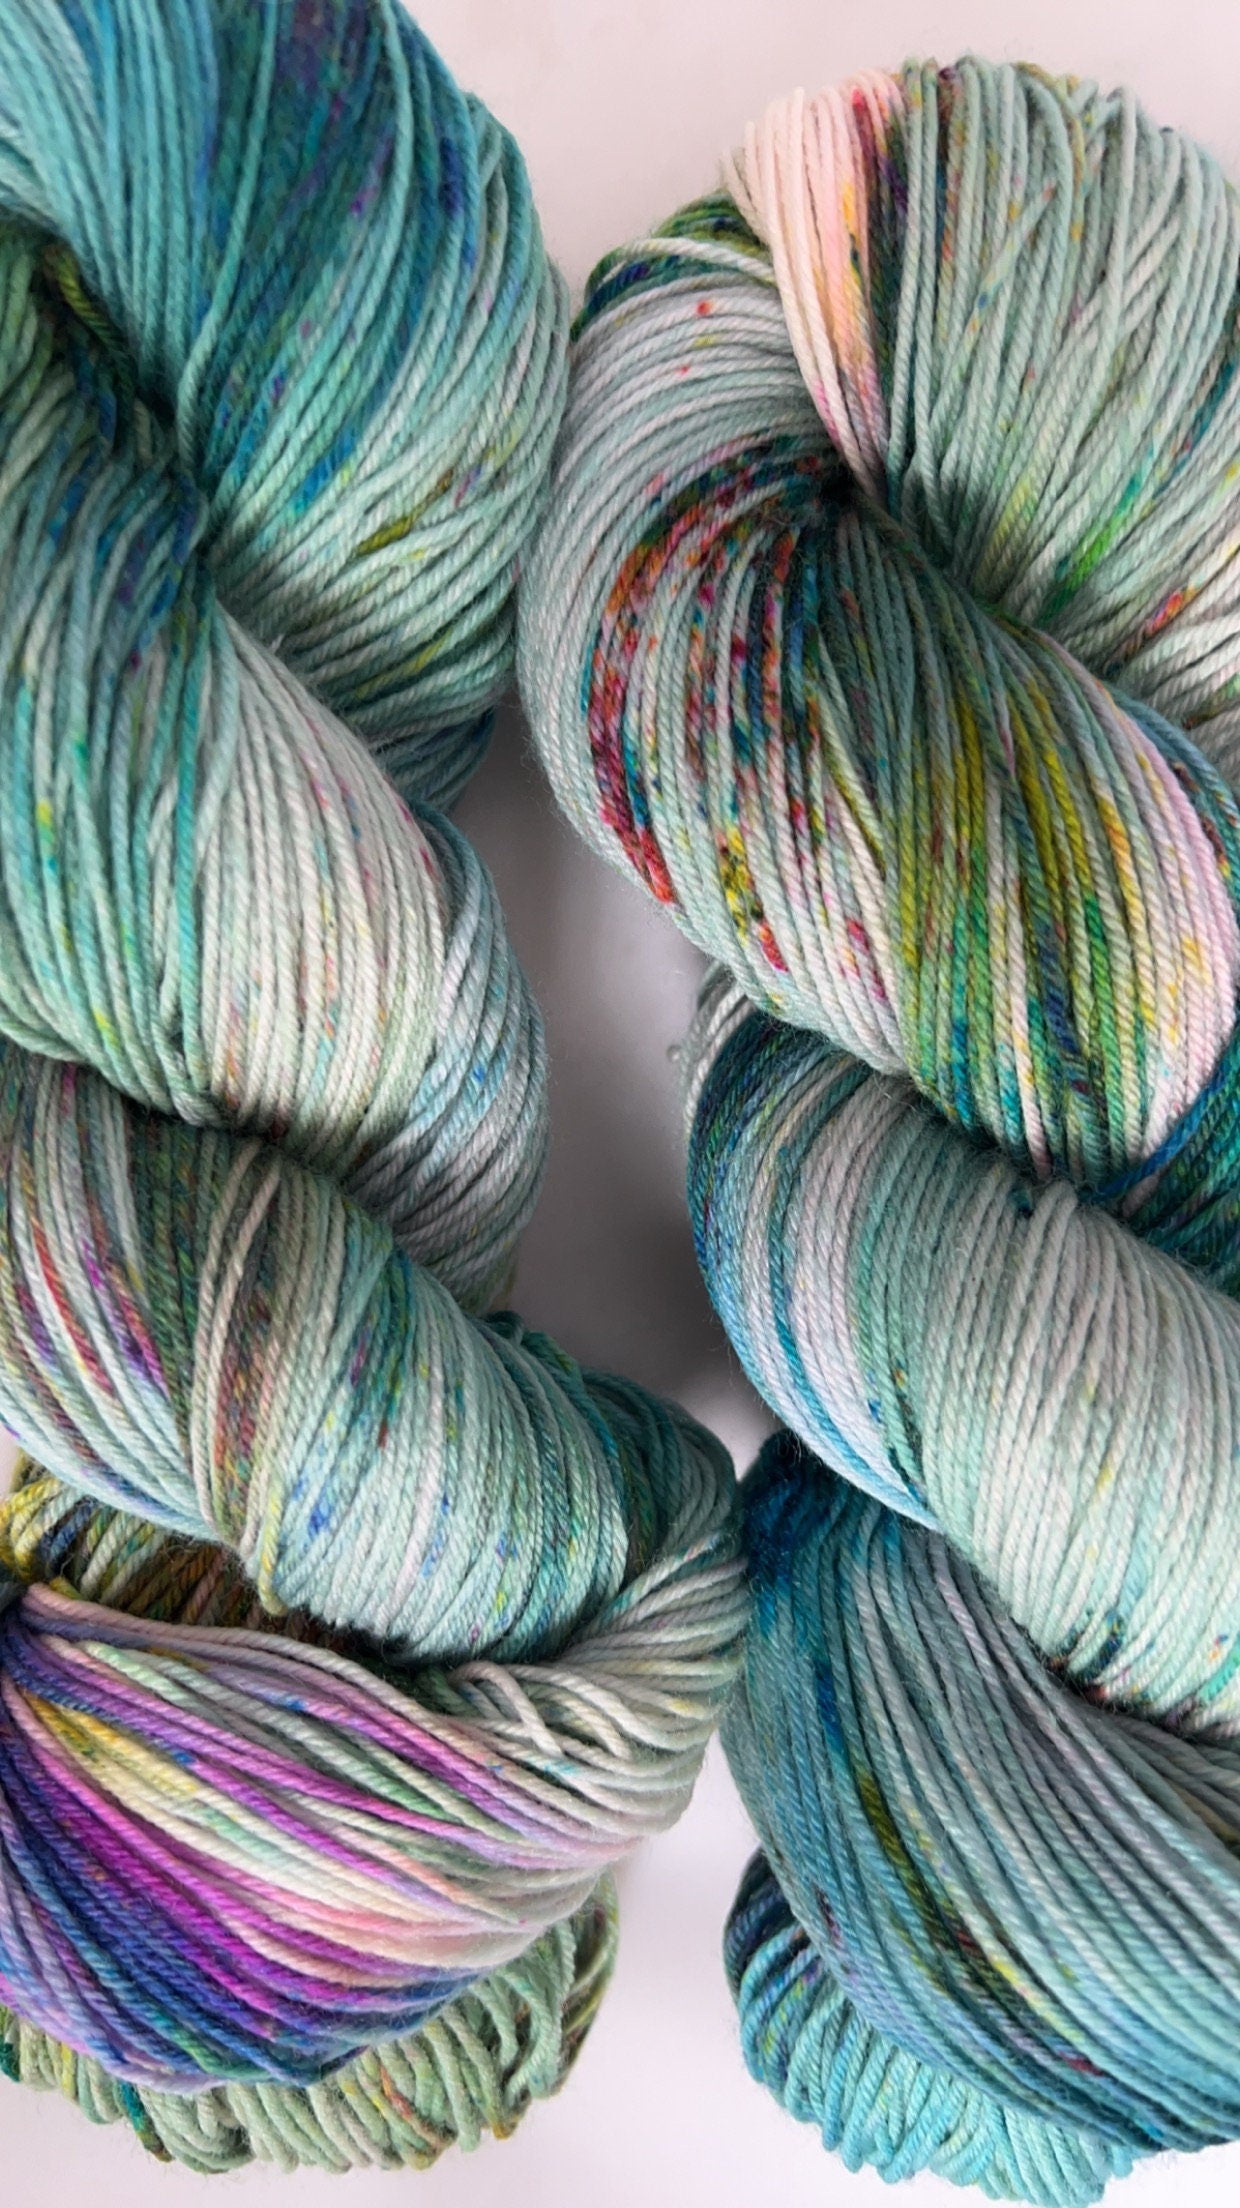 Hand-Dyed Merino Wool Yarn - Soft and Durable Yarn for Knitting and Crocheting | Indie Dyed Merino Wool | Fingering | La Isla Bonita